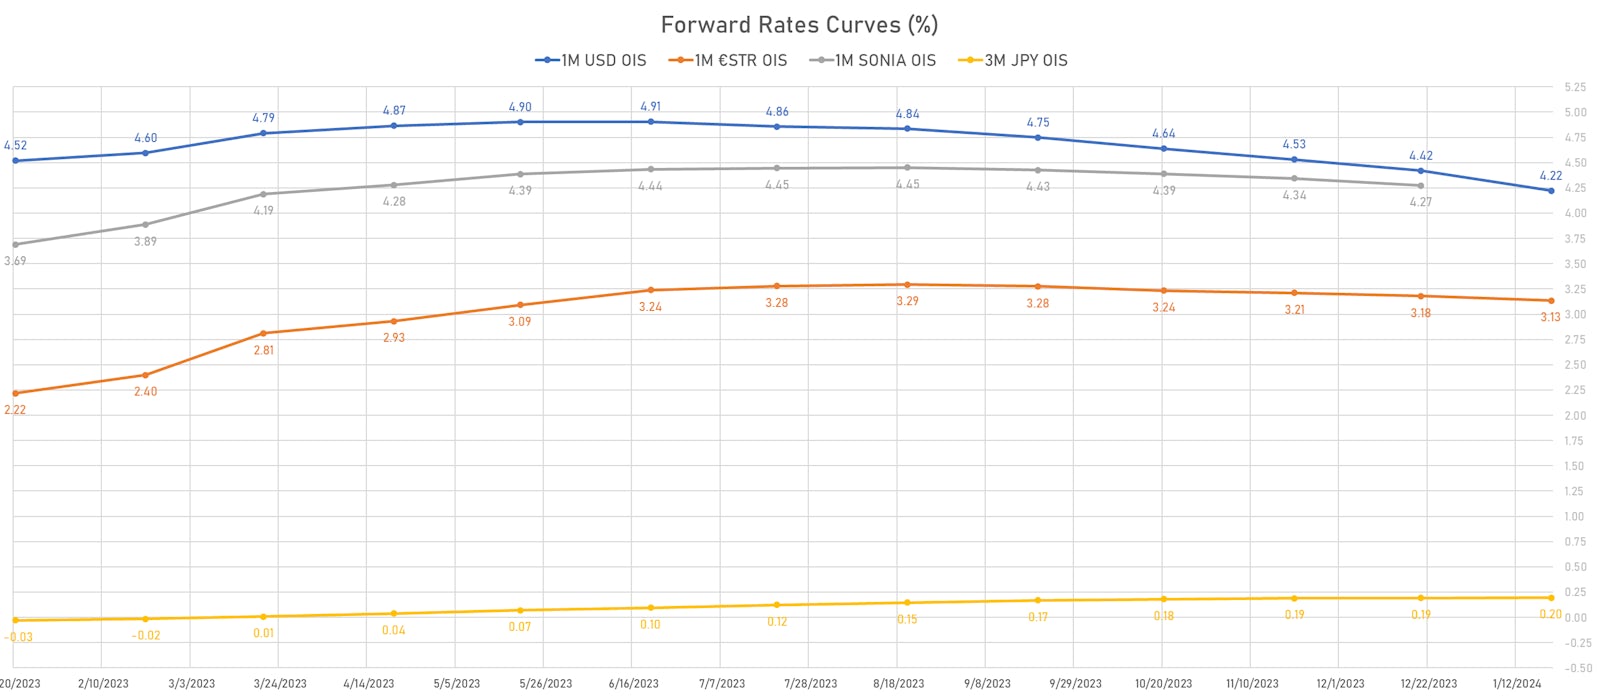 Forward Rates Curves | Sources: phipost.com, Refinitiv data 